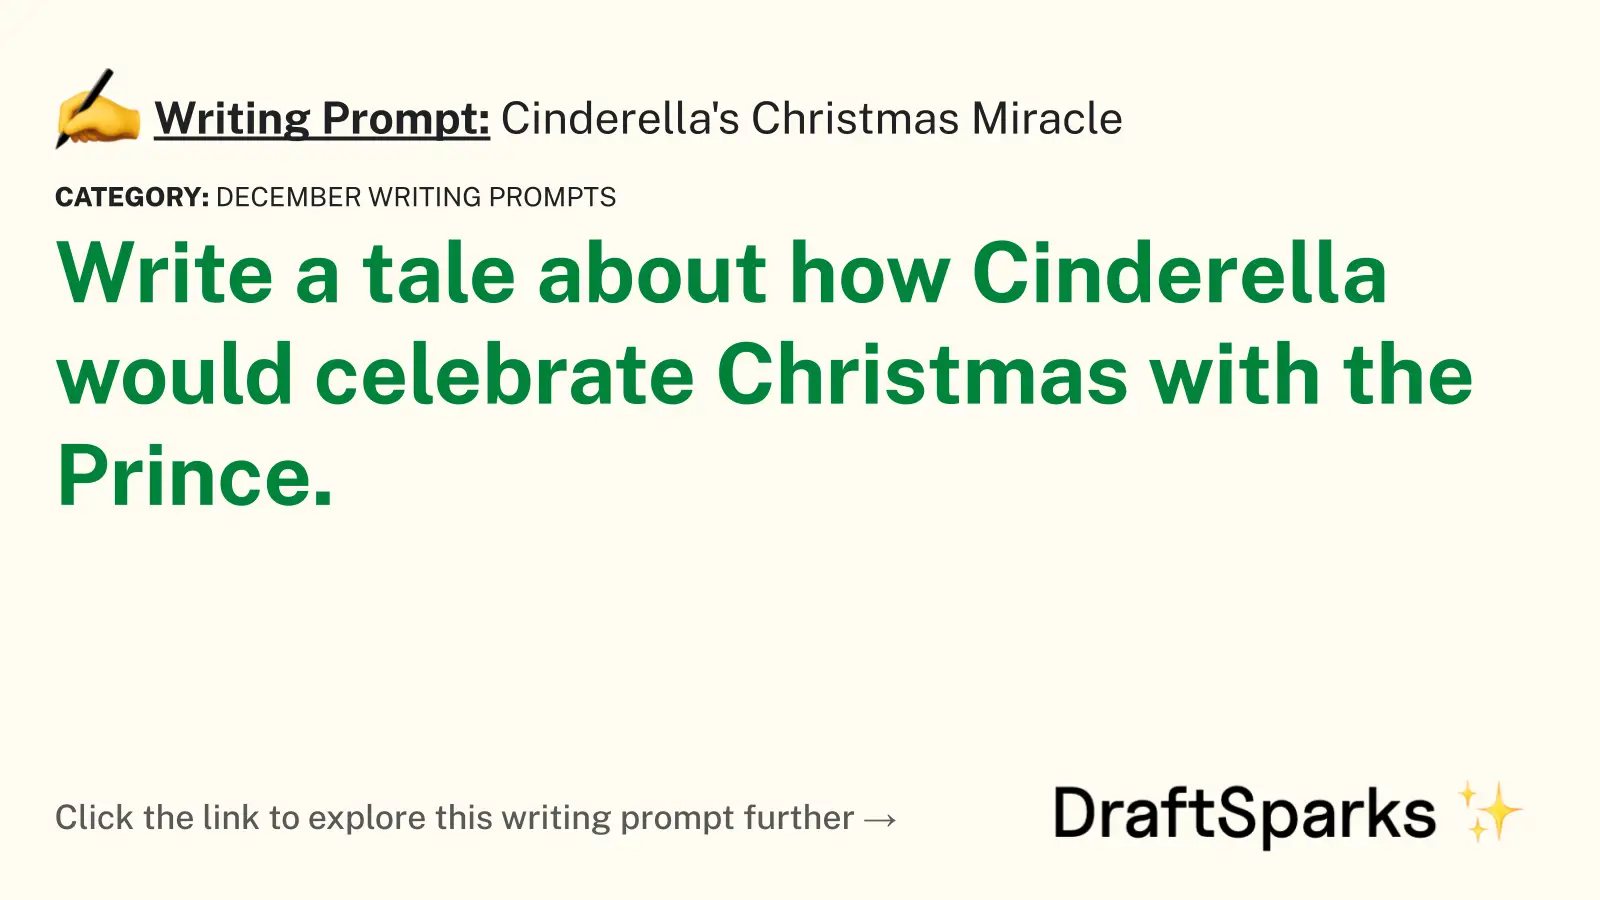 Cinderella’s Christmas Miracle